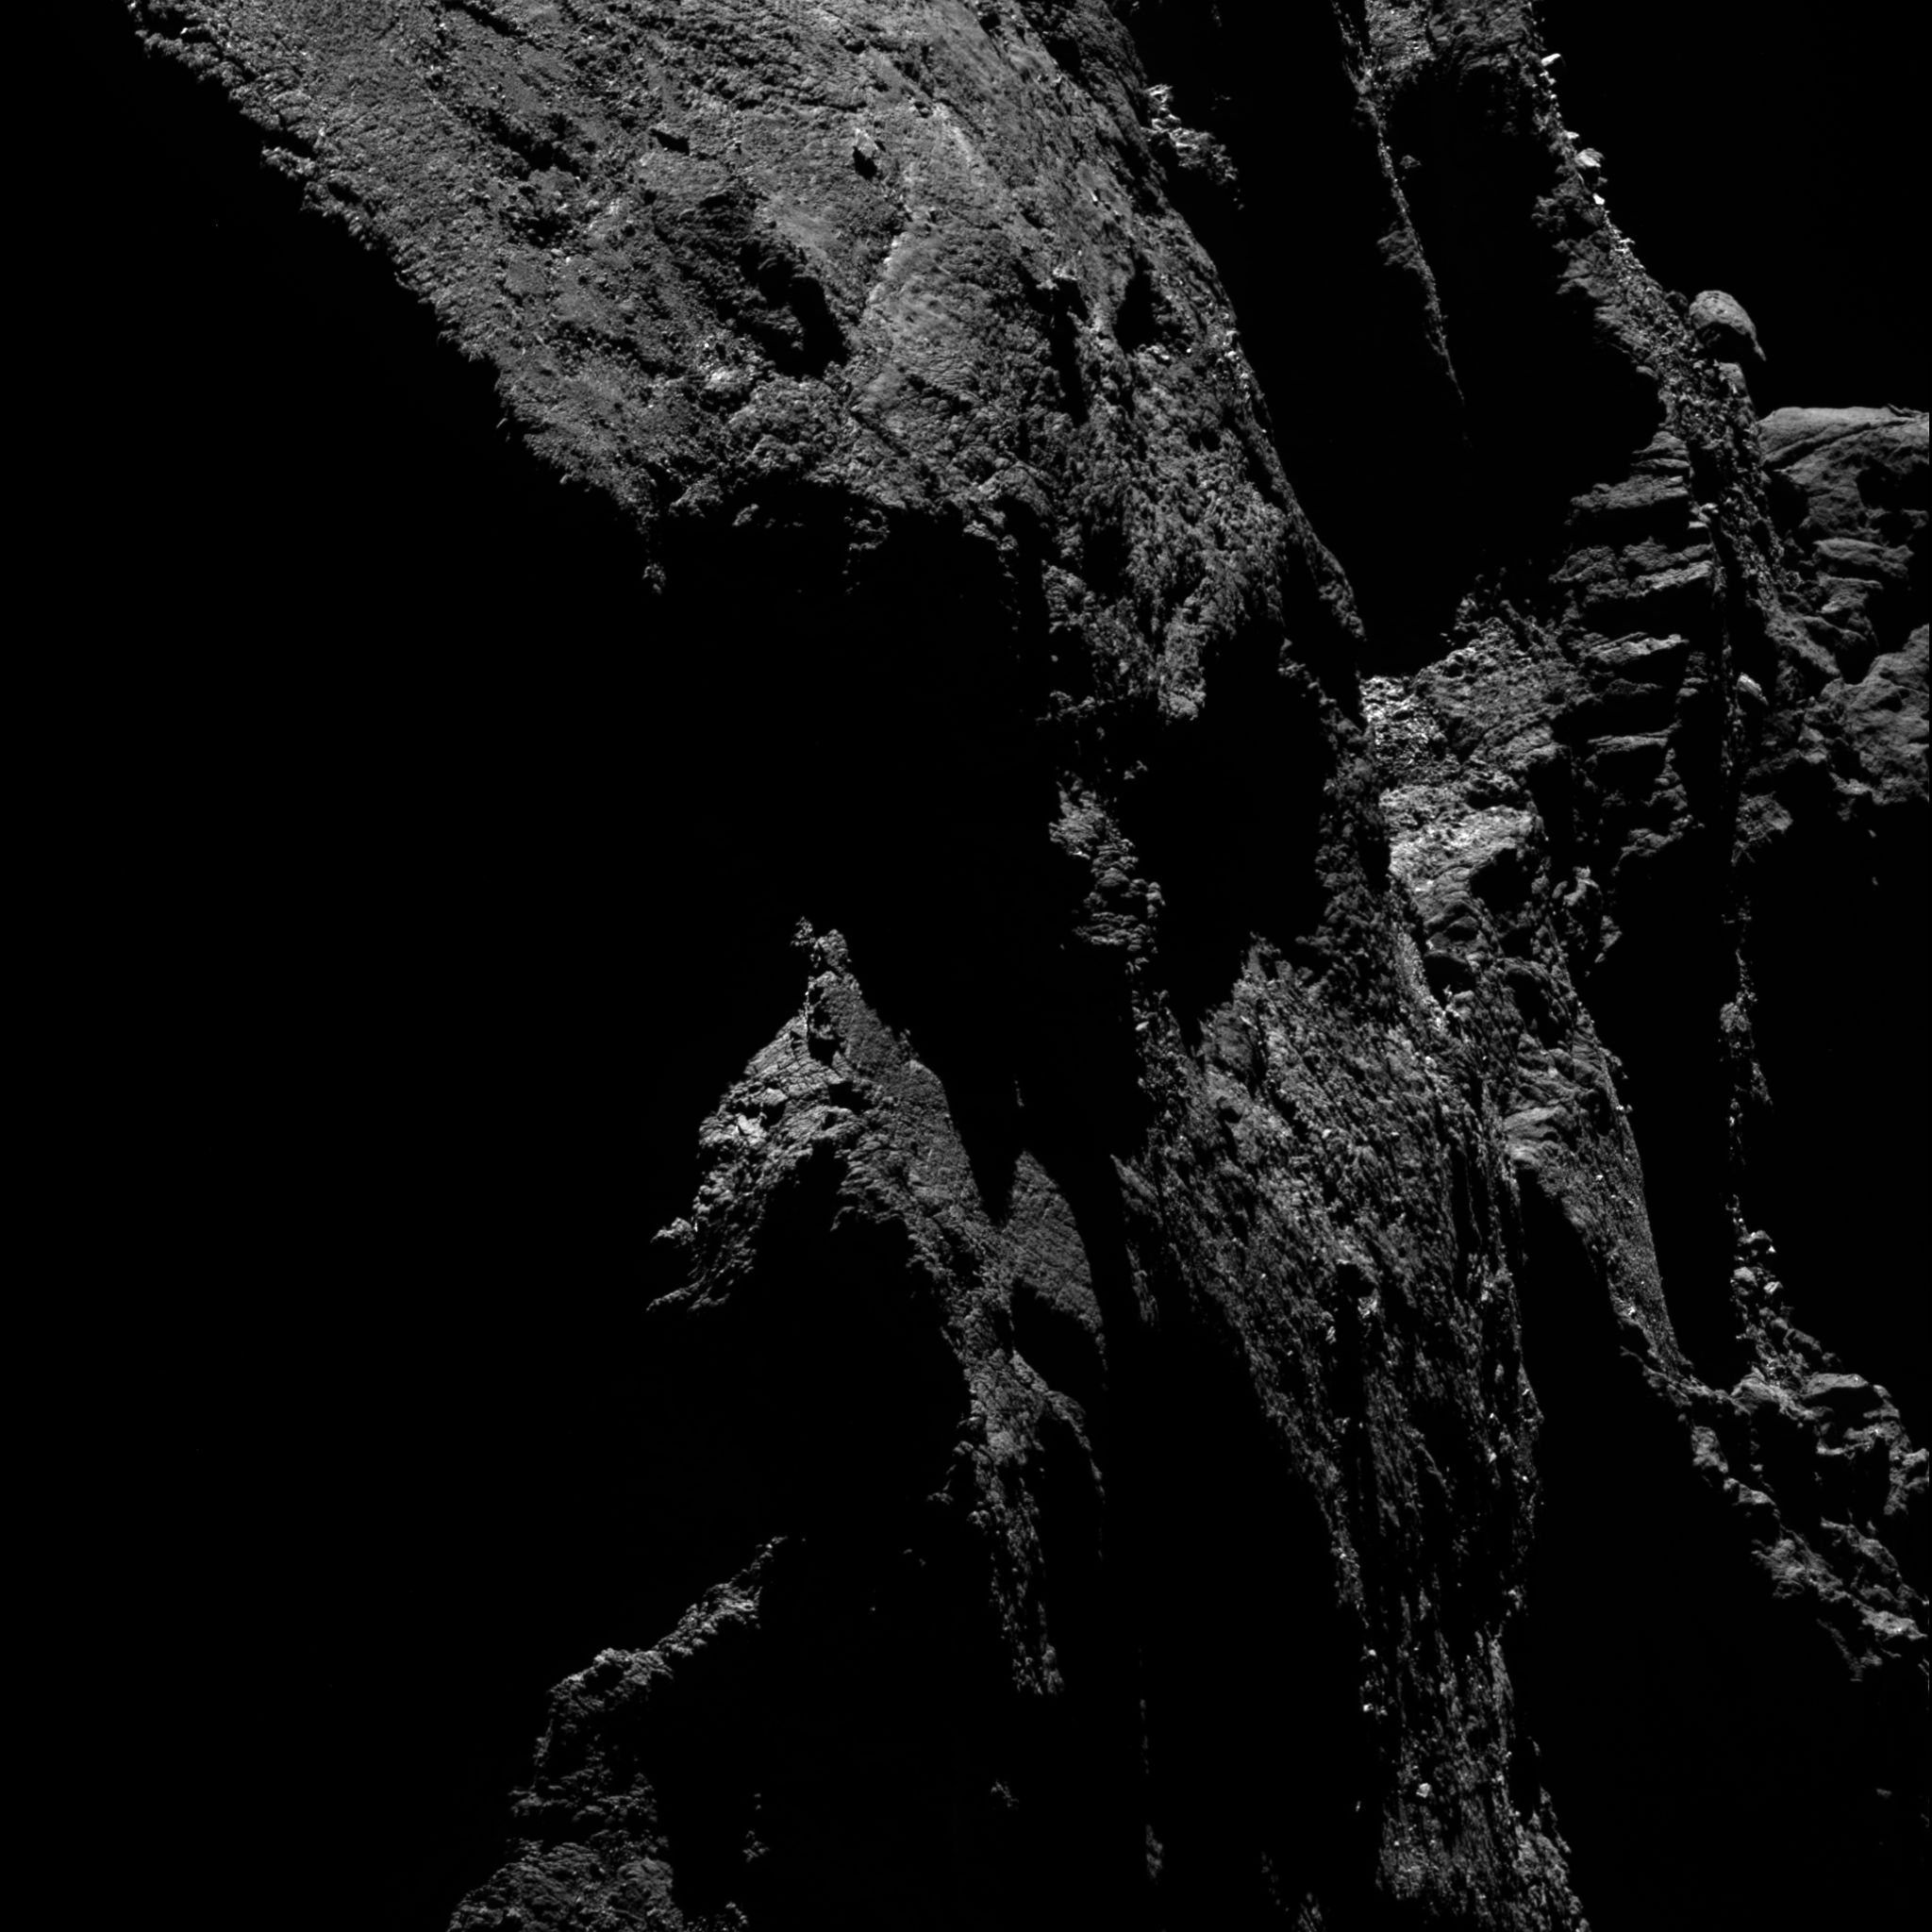 ESA Space Photography Comet Shadow OSiRiS REx ROSETTA OSiRiS 67P Churyumov Gerasimenko Monochrome 2048x2048